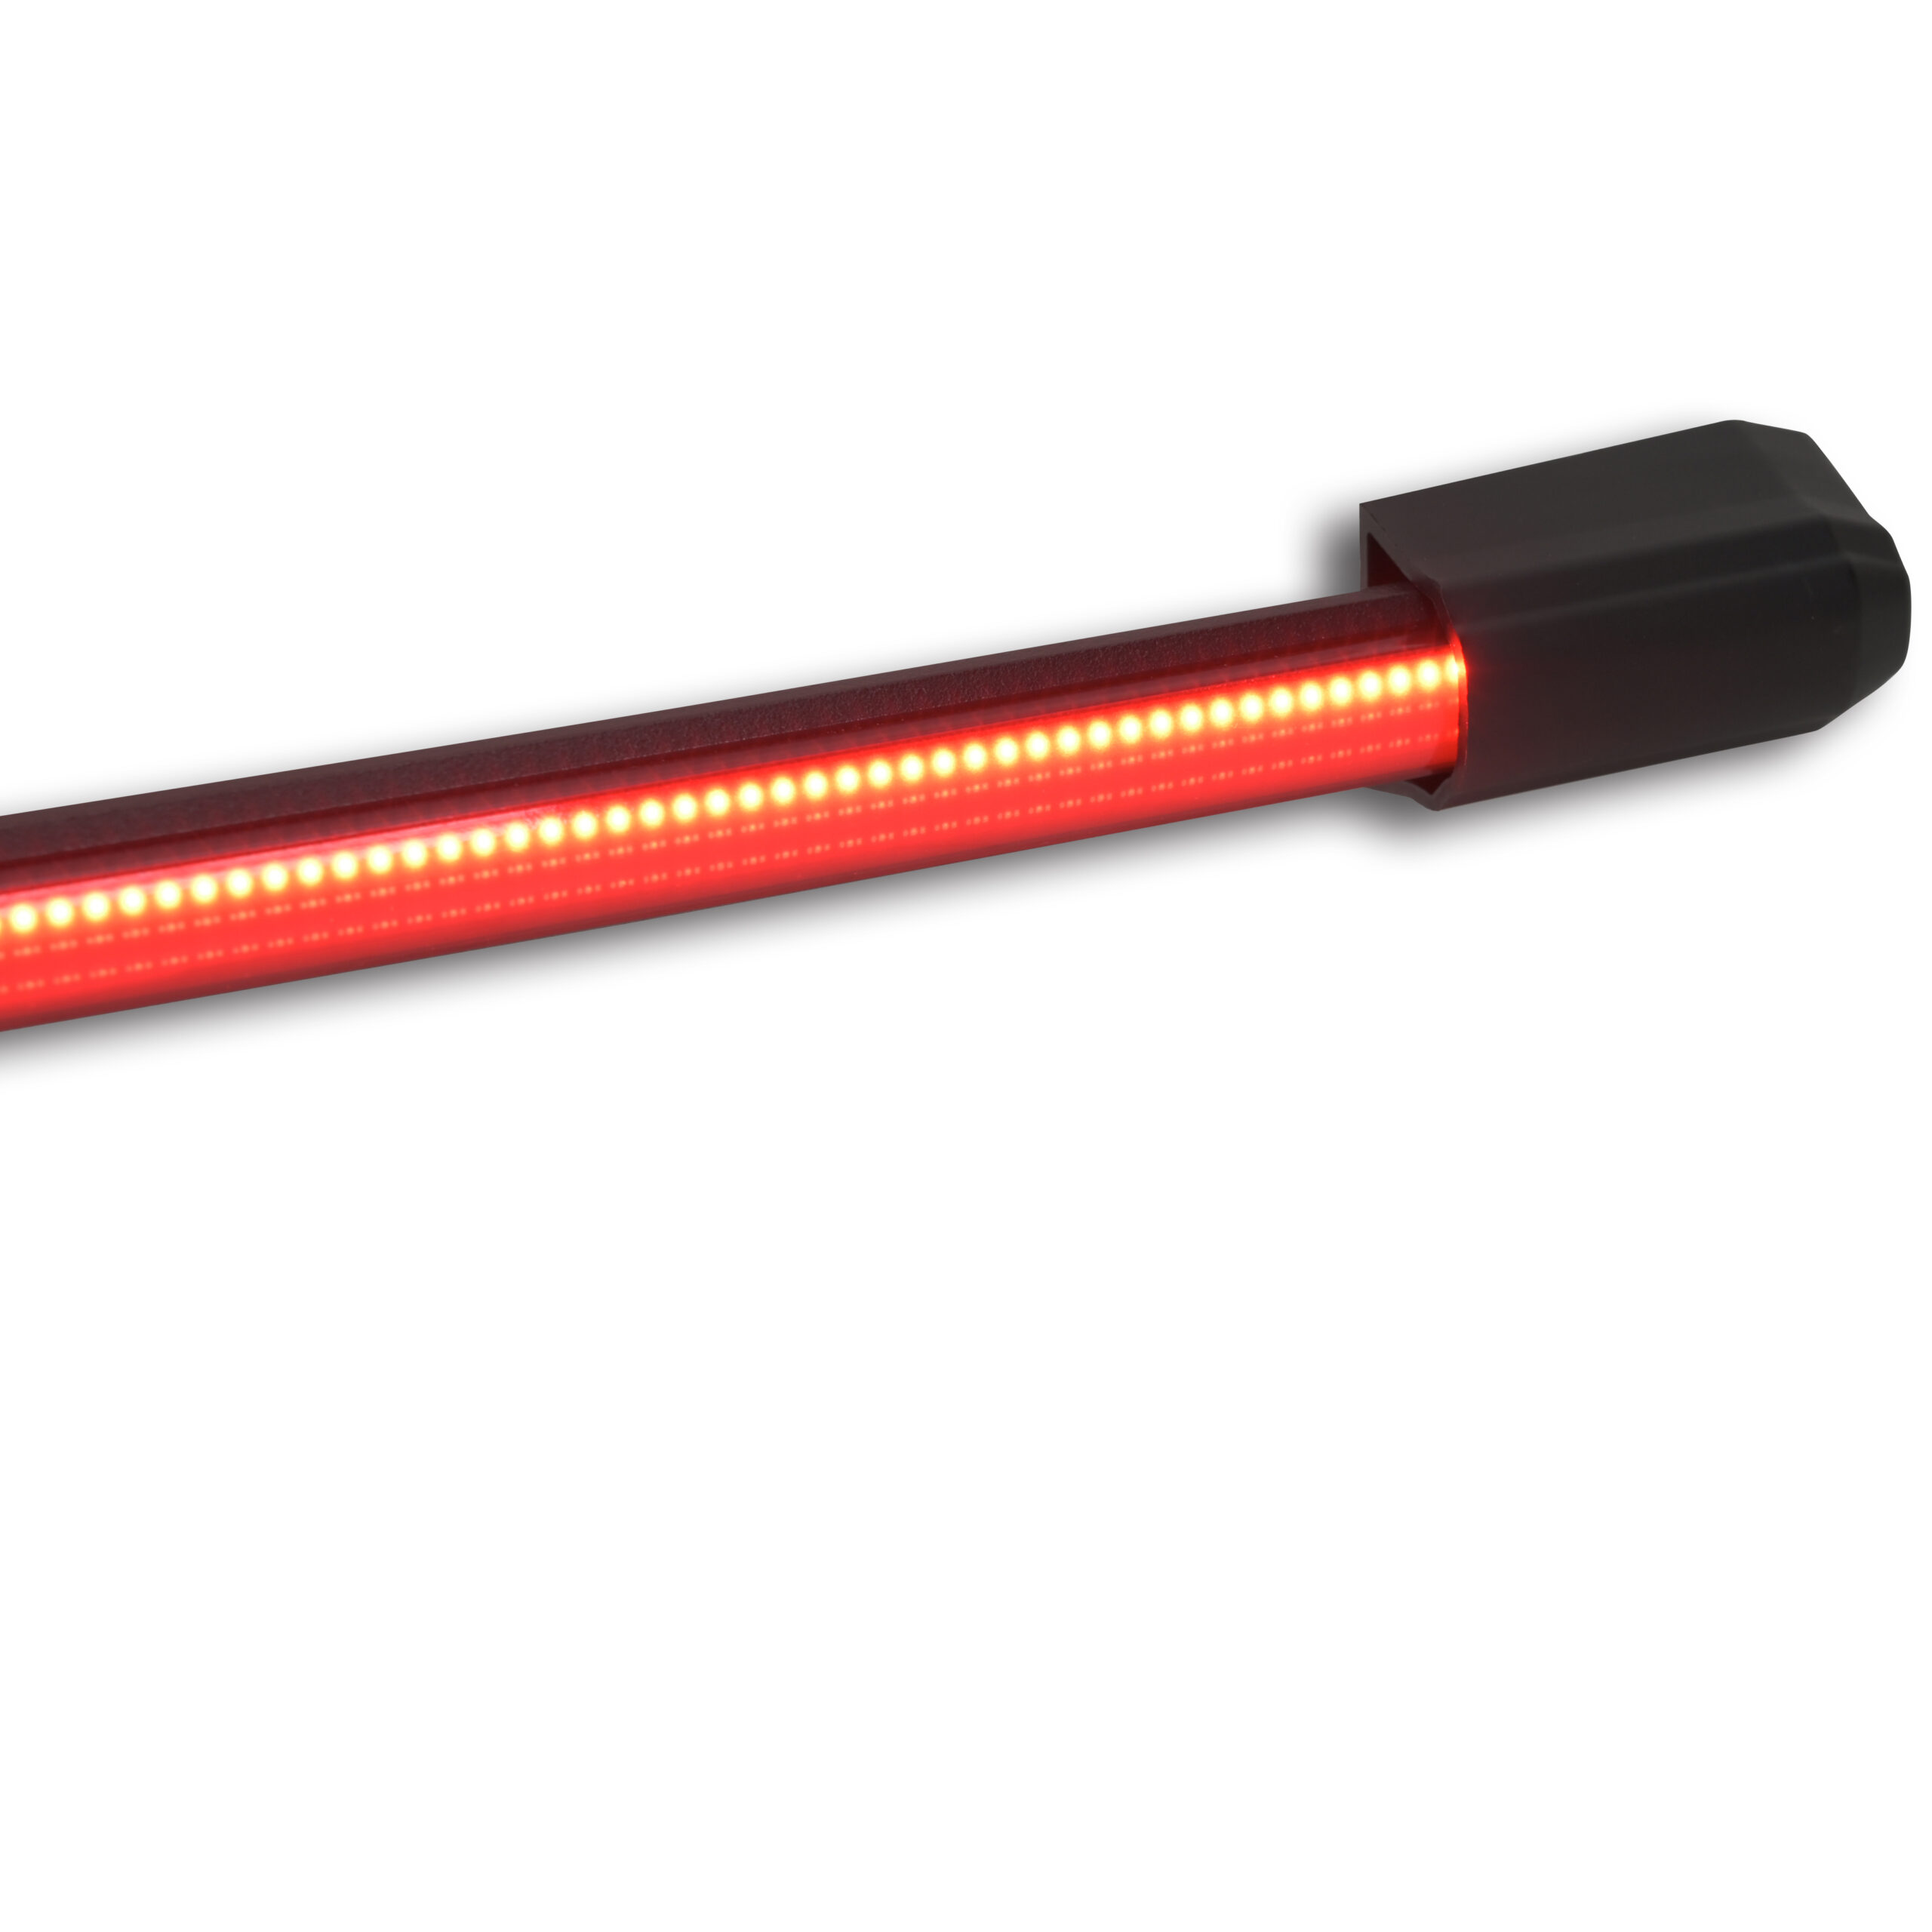 https://www.putco.com/wp-content/uploads/Putco-E-Blade-Anti-Collision-II-LED-Light-Bar-Red-Light-scaled.jpg